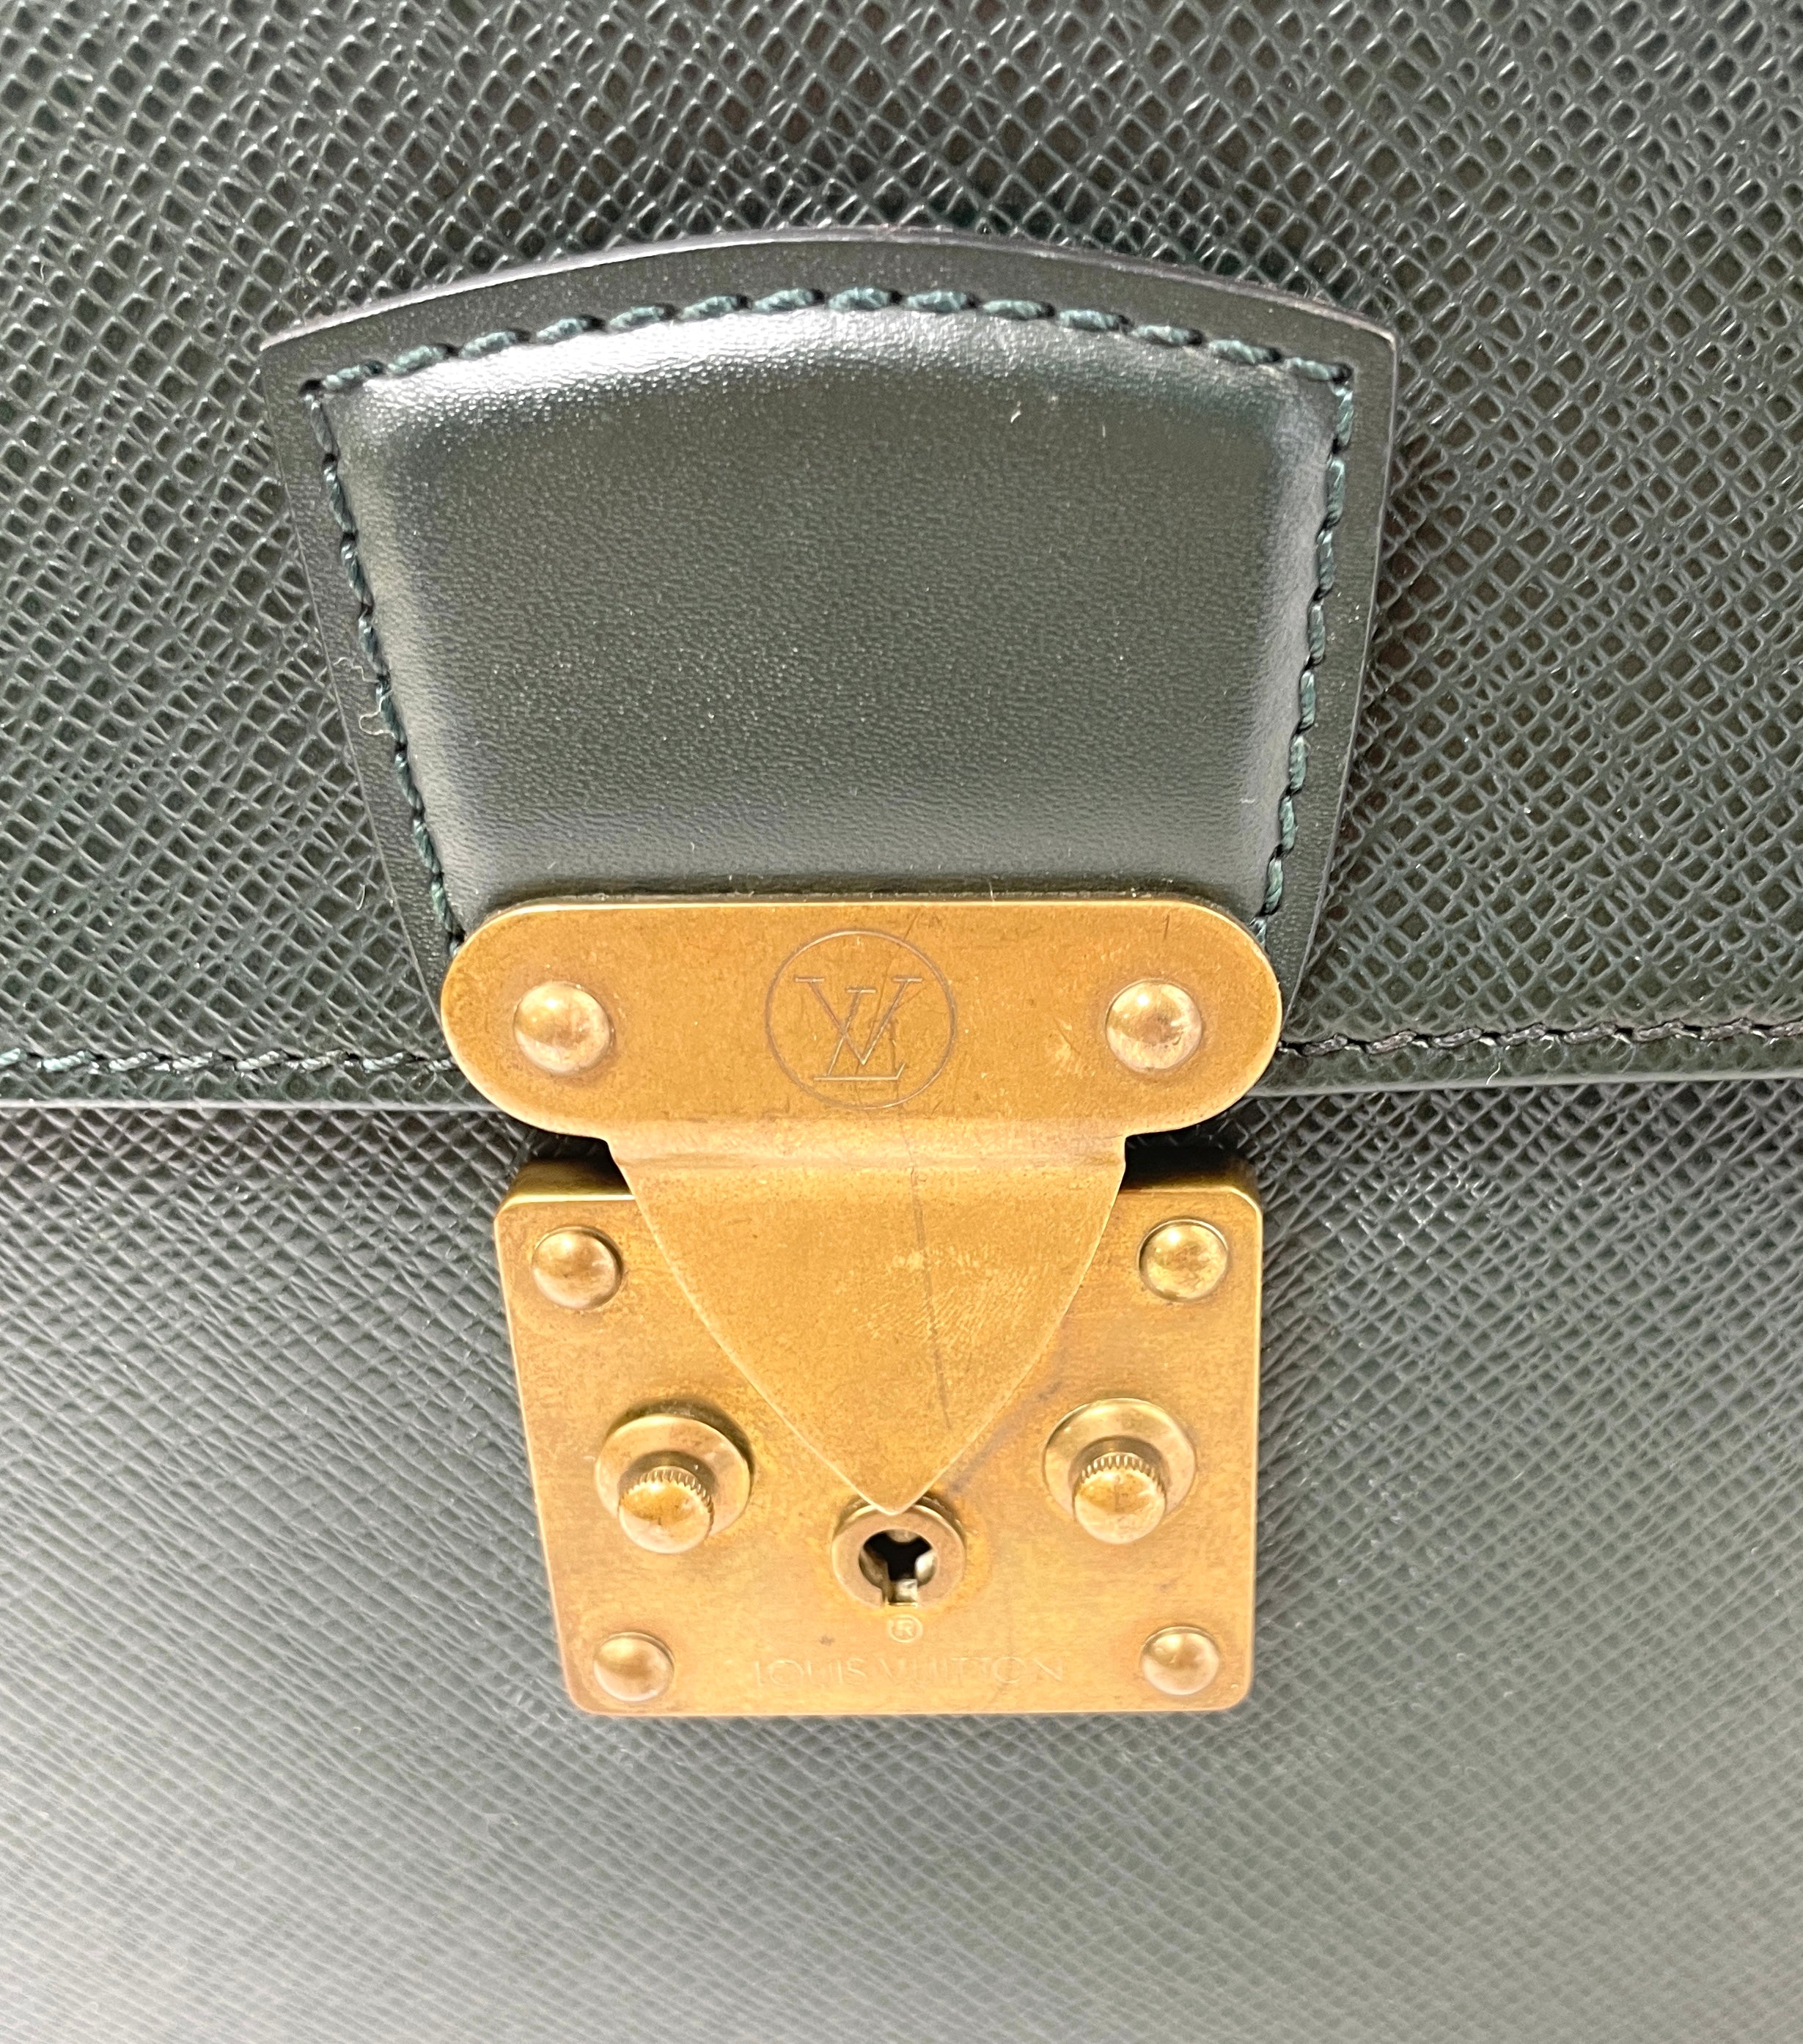 Louis Vuitton Zippy Wallet Damier Ebene Used (5966)